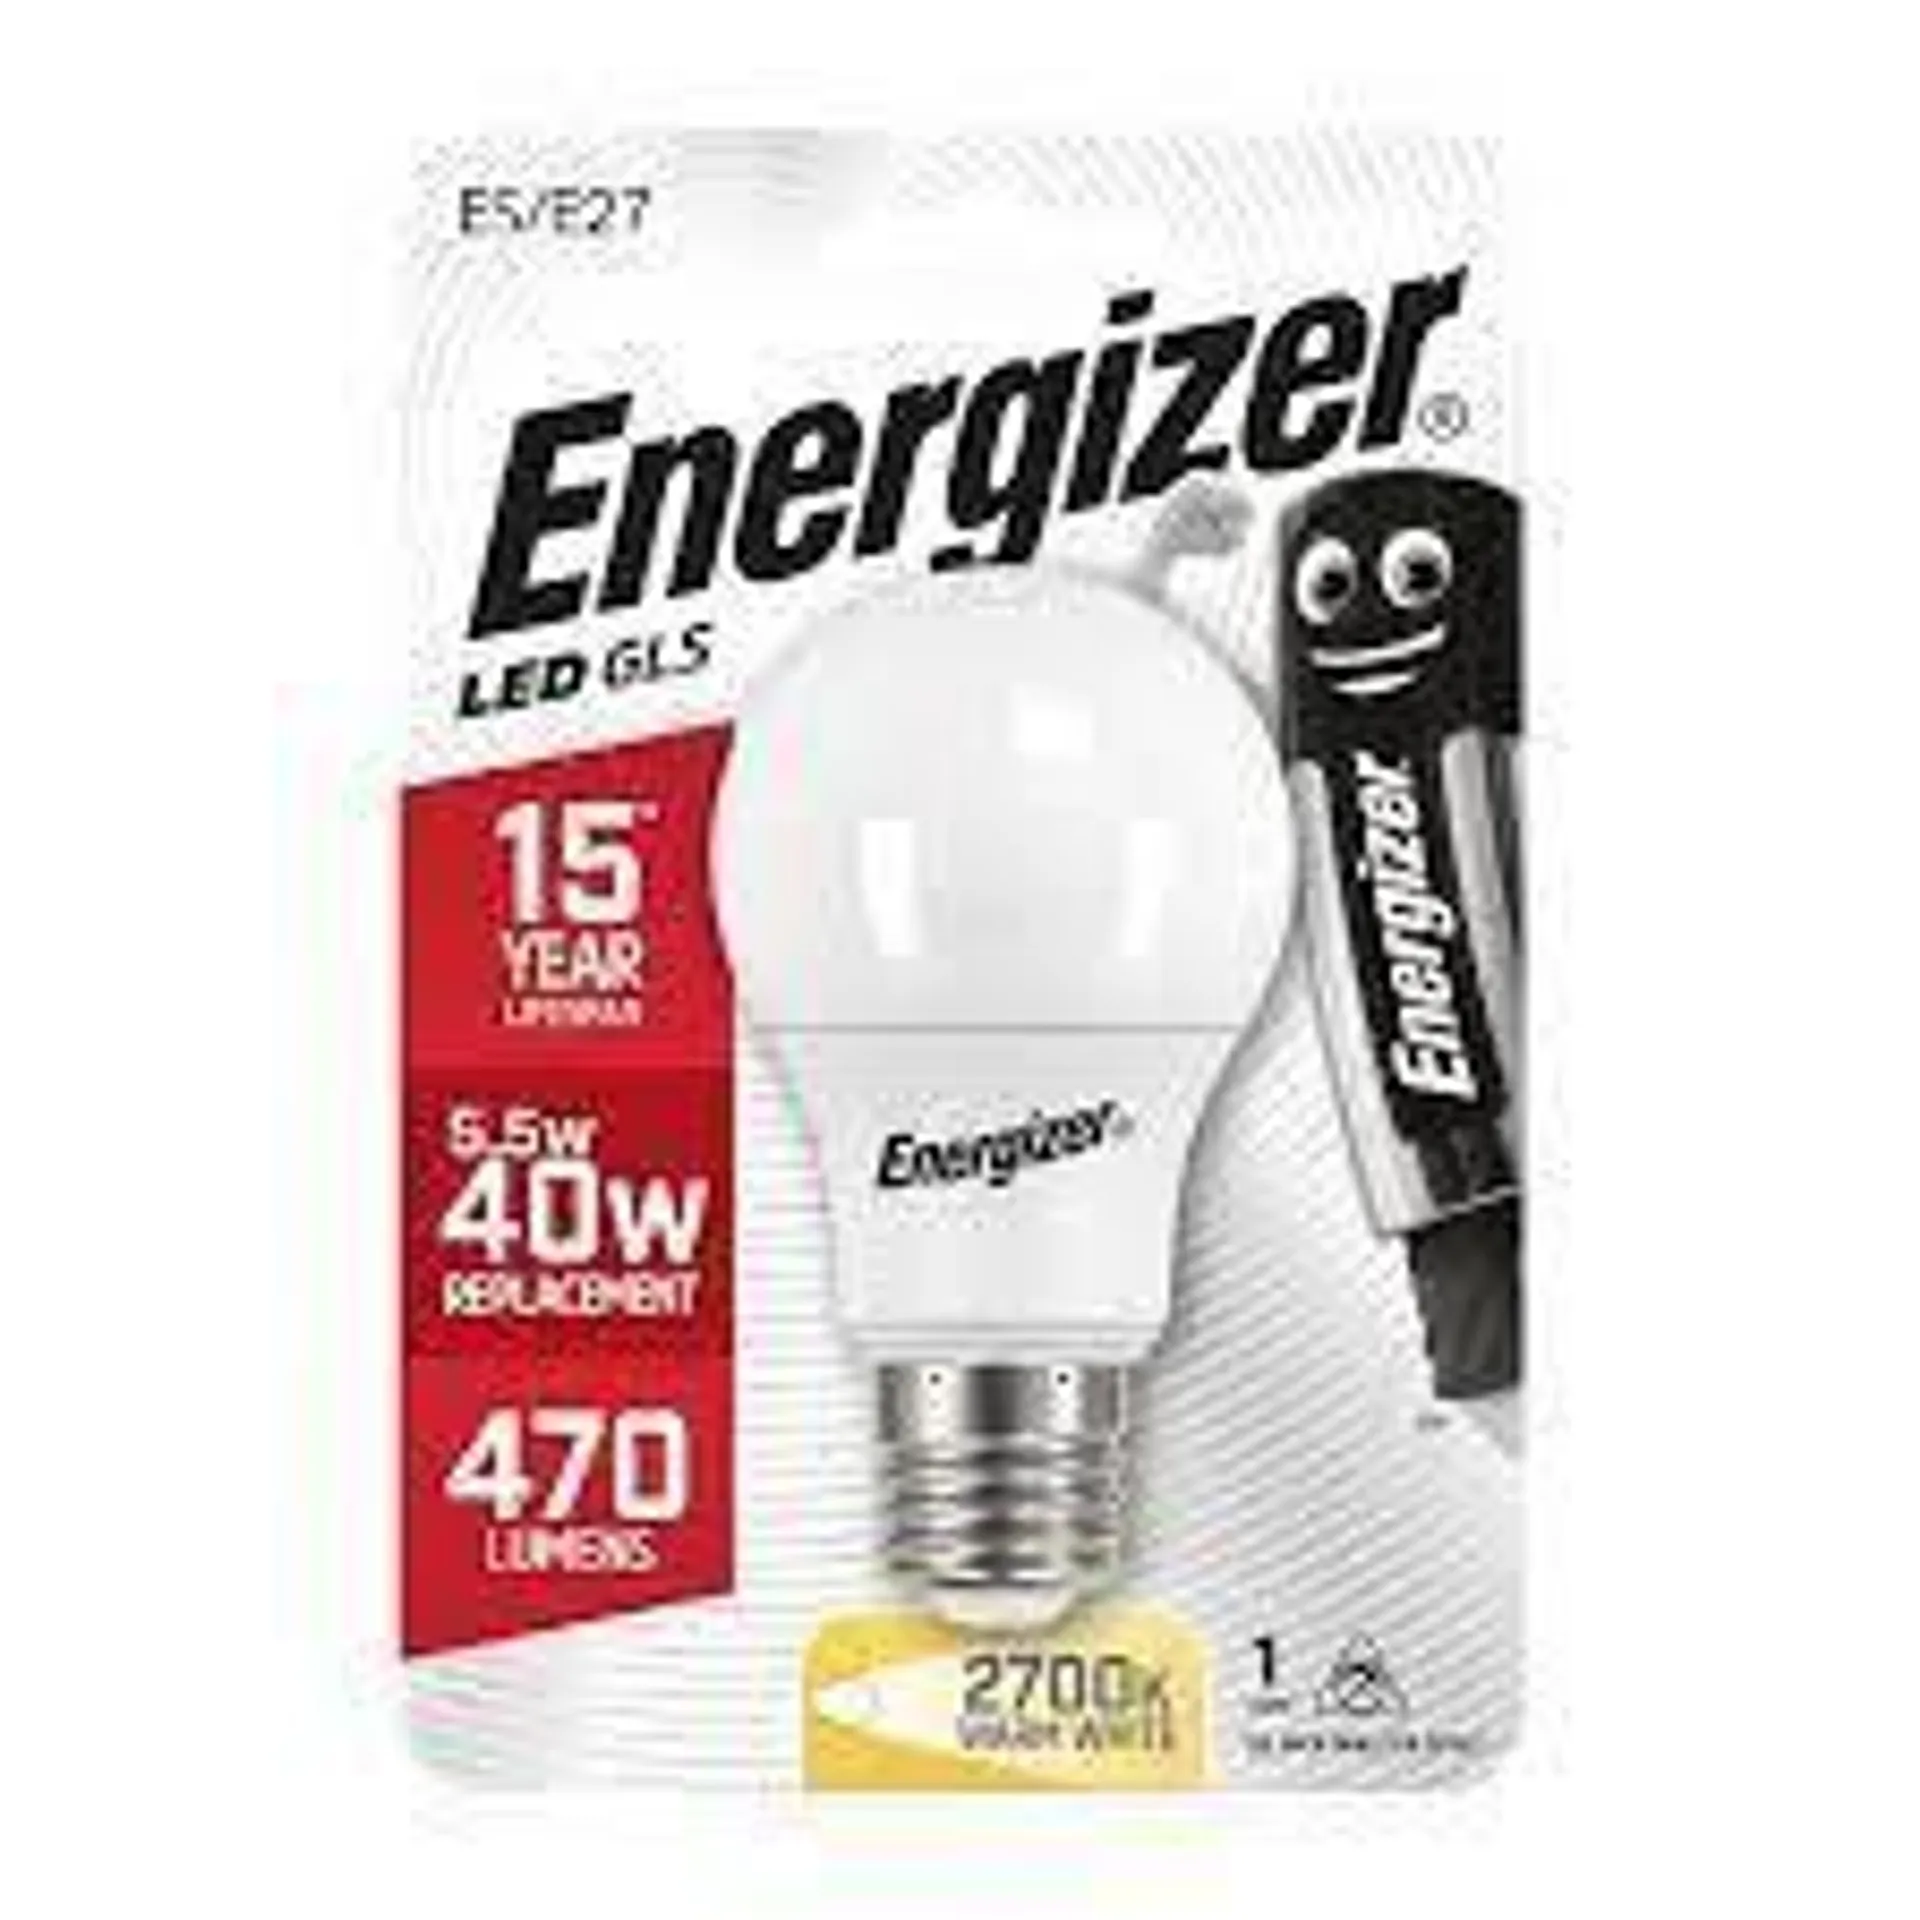 Energizer LED GLS 4.9w ES / E27 Bulb